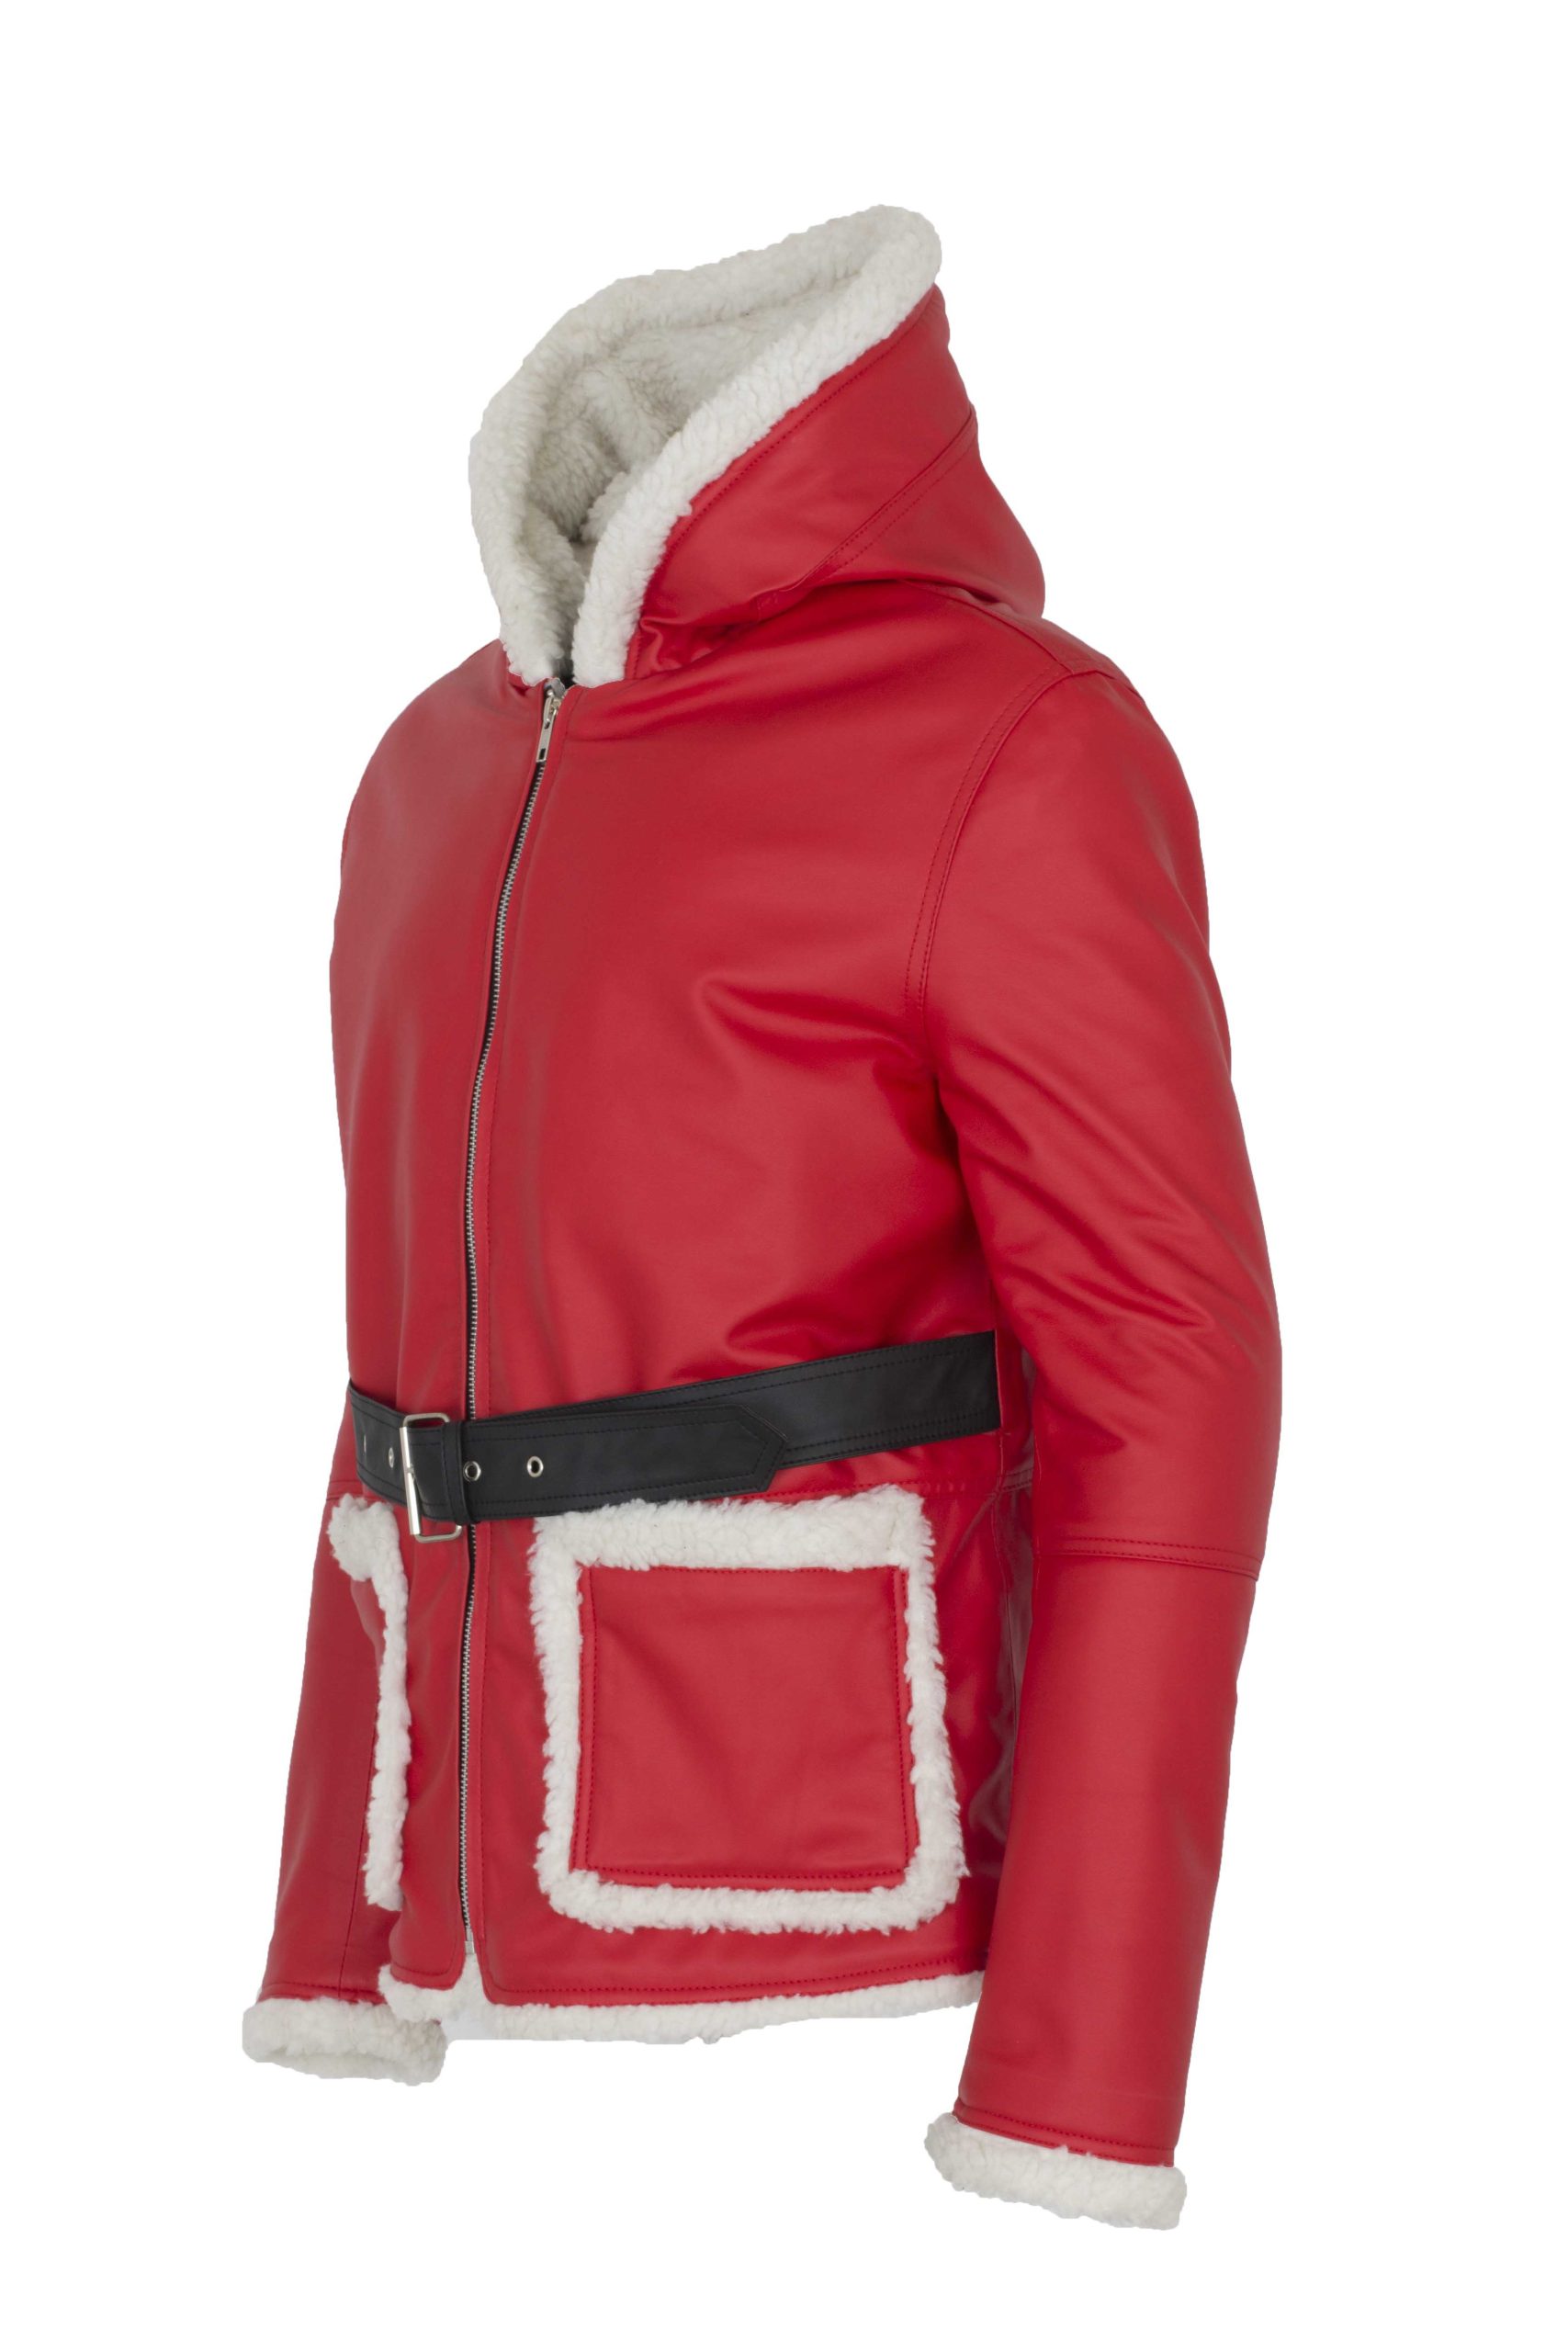 Santa Claus Leather Jacket Chirstmas Costume